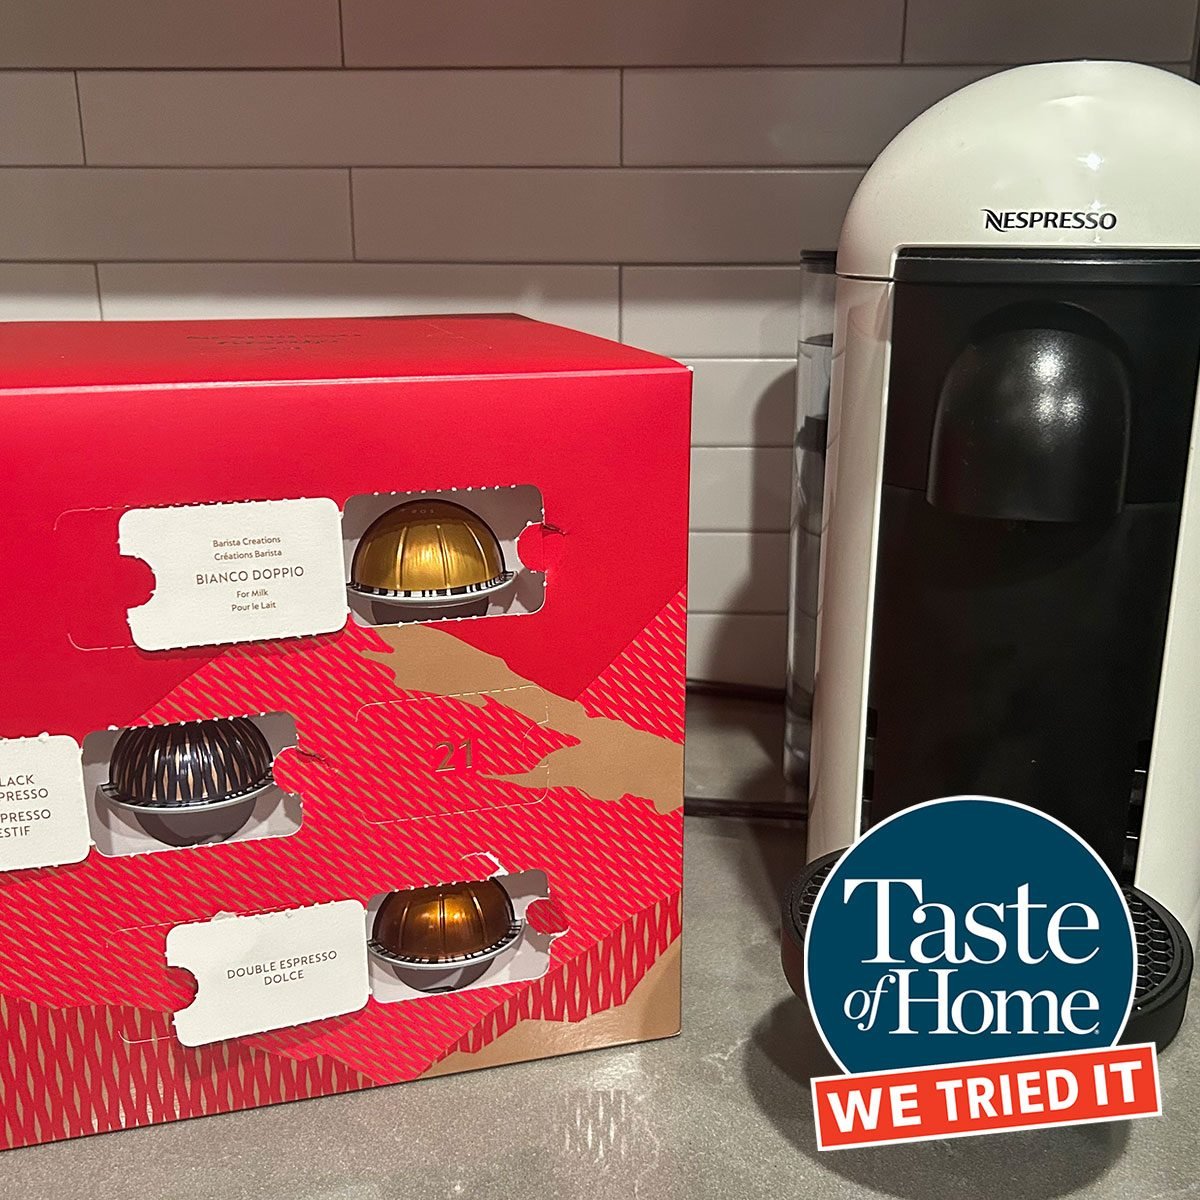 New Nespresso Double Espresso Dolce Review & Taste Test 